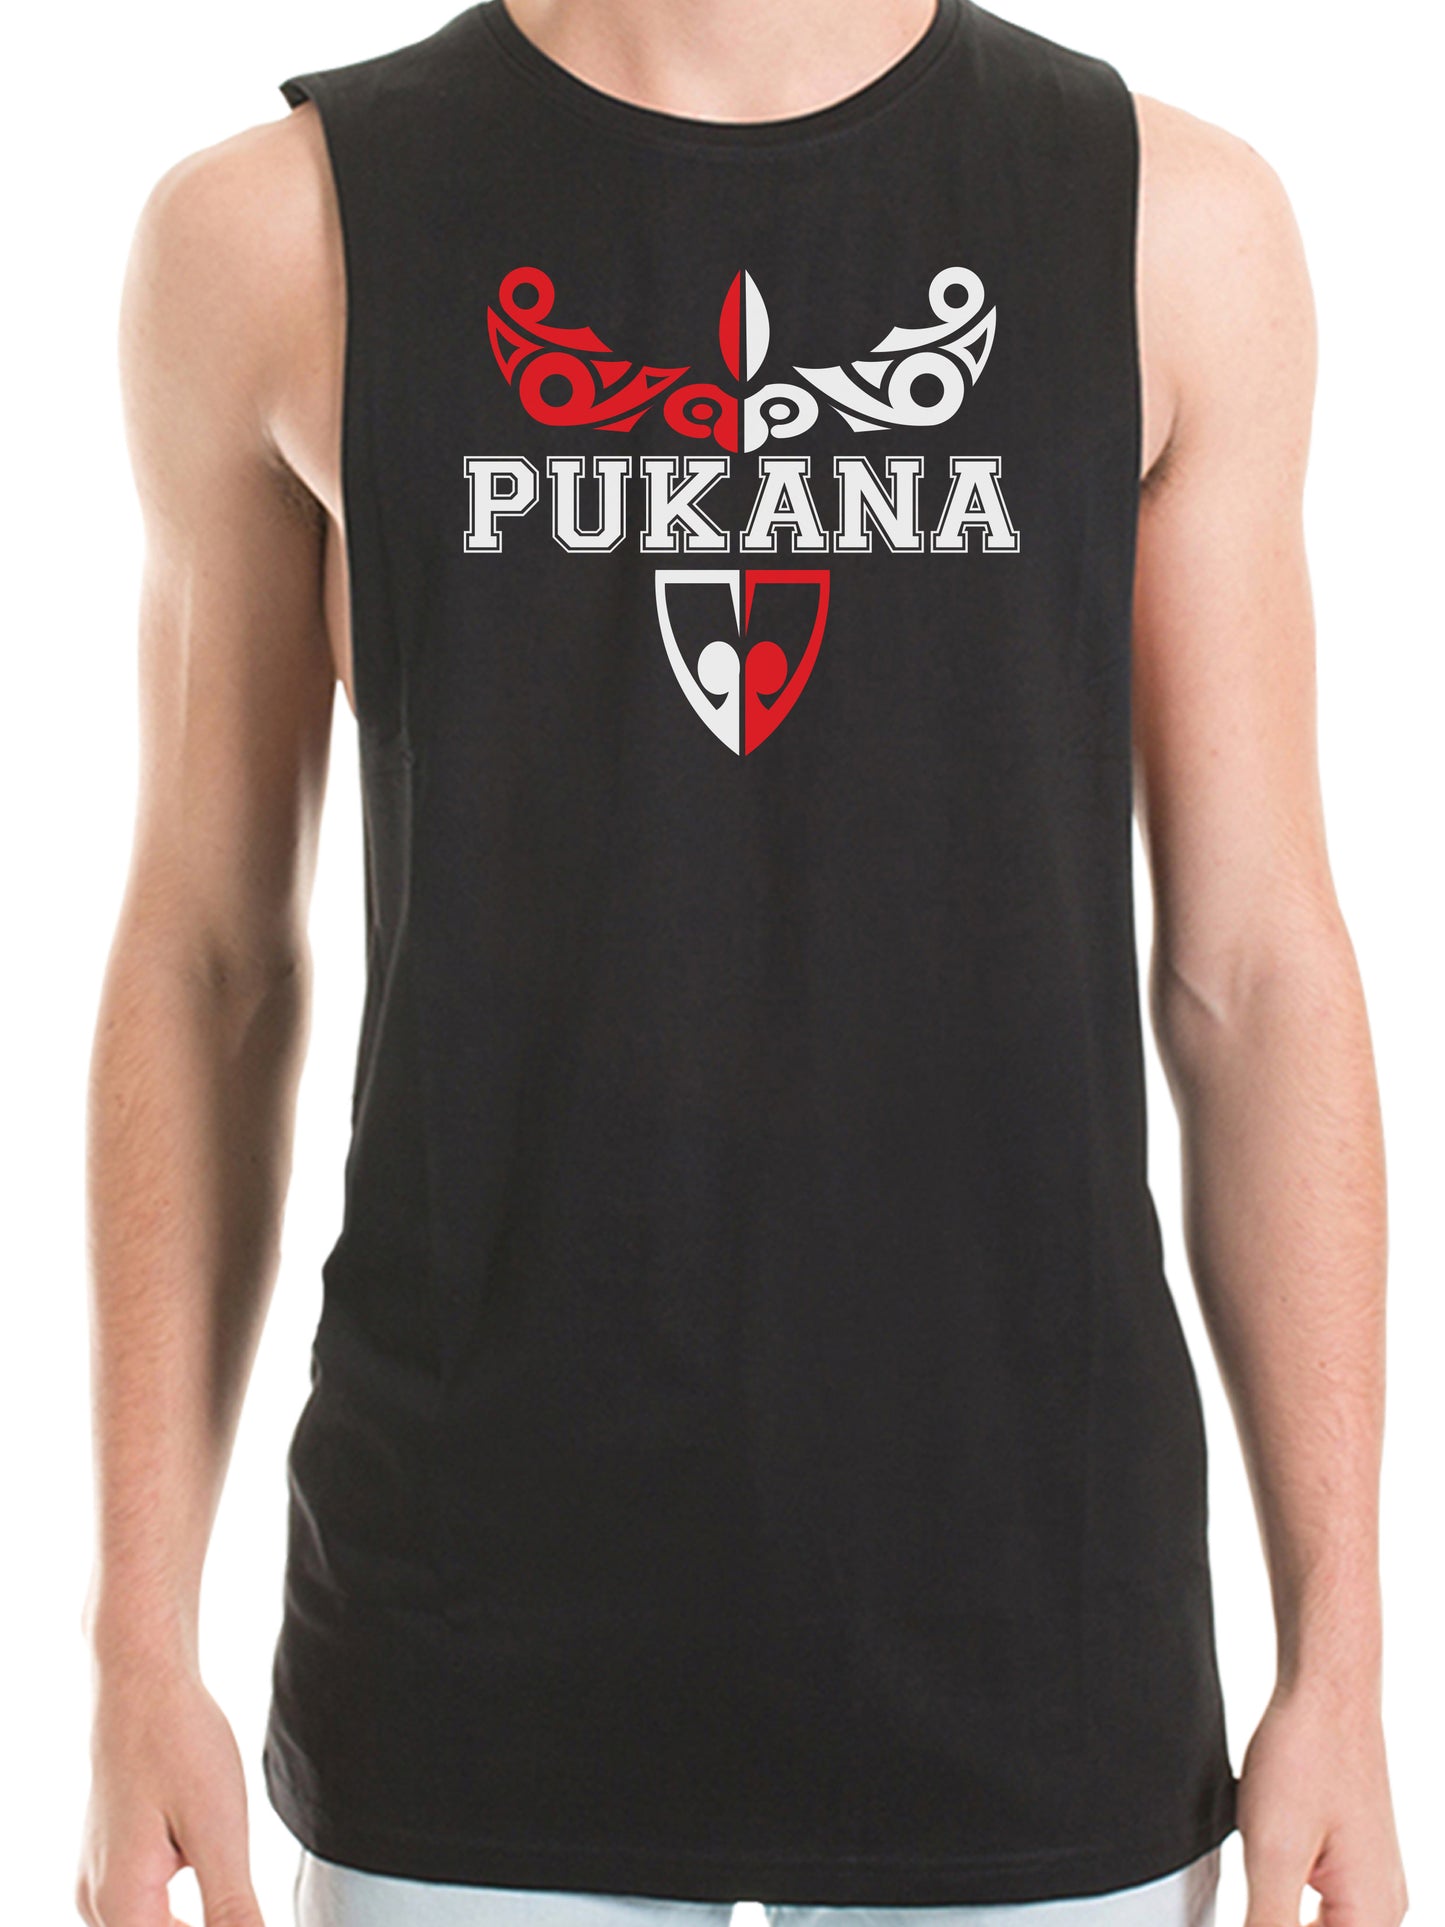 The Pukana muscle top